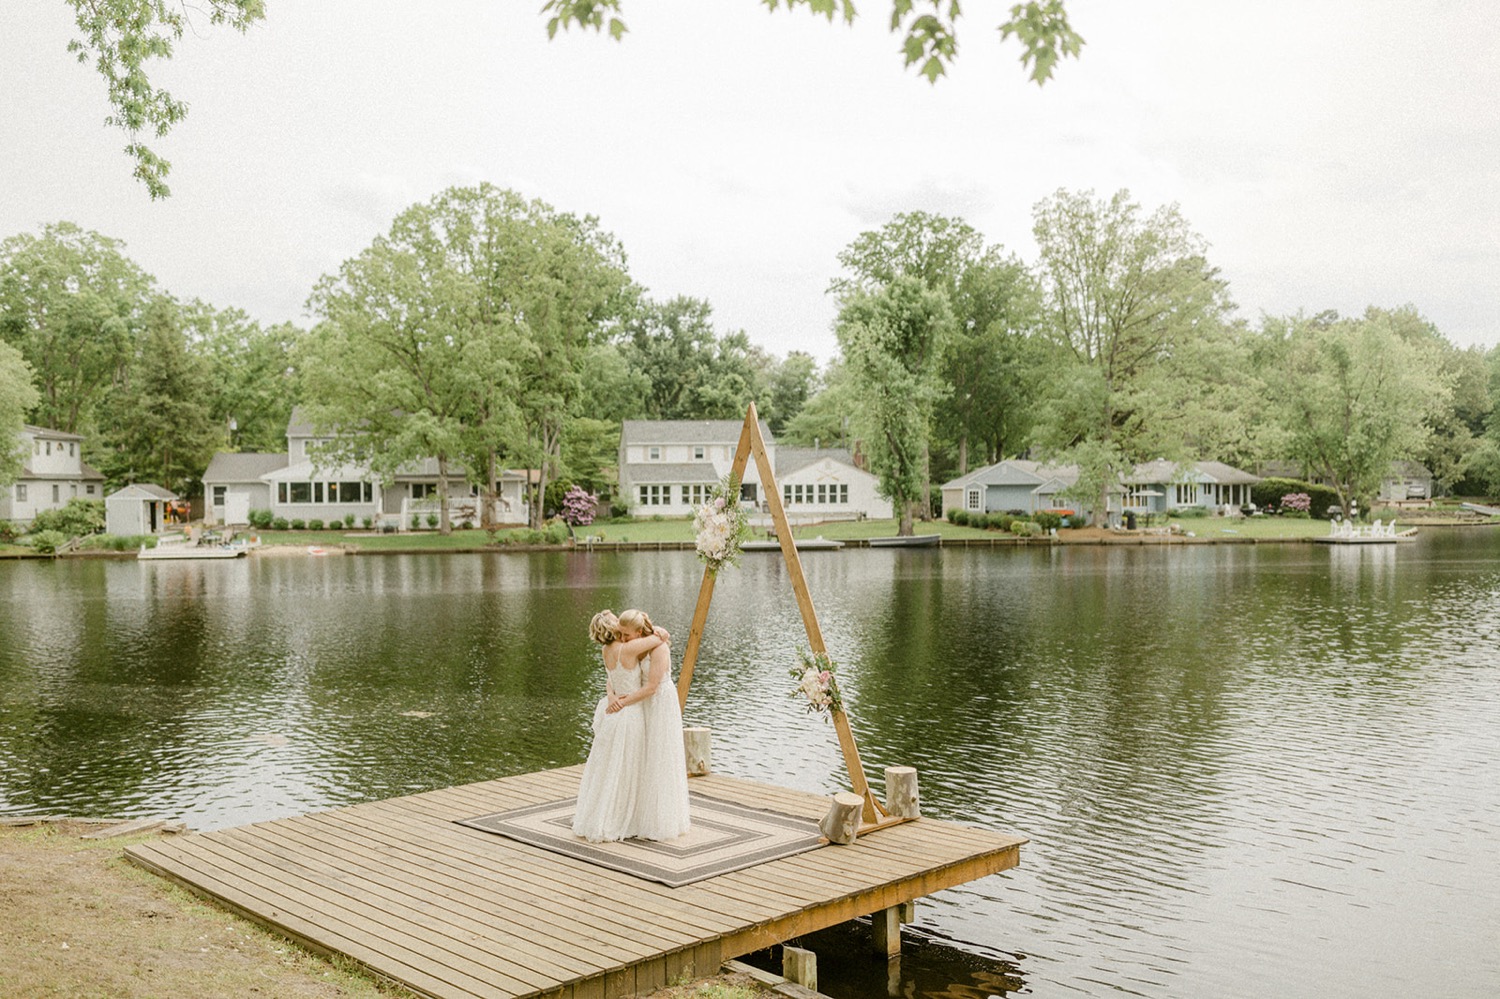 brides first dance on dock lakeside backyard micro wedding